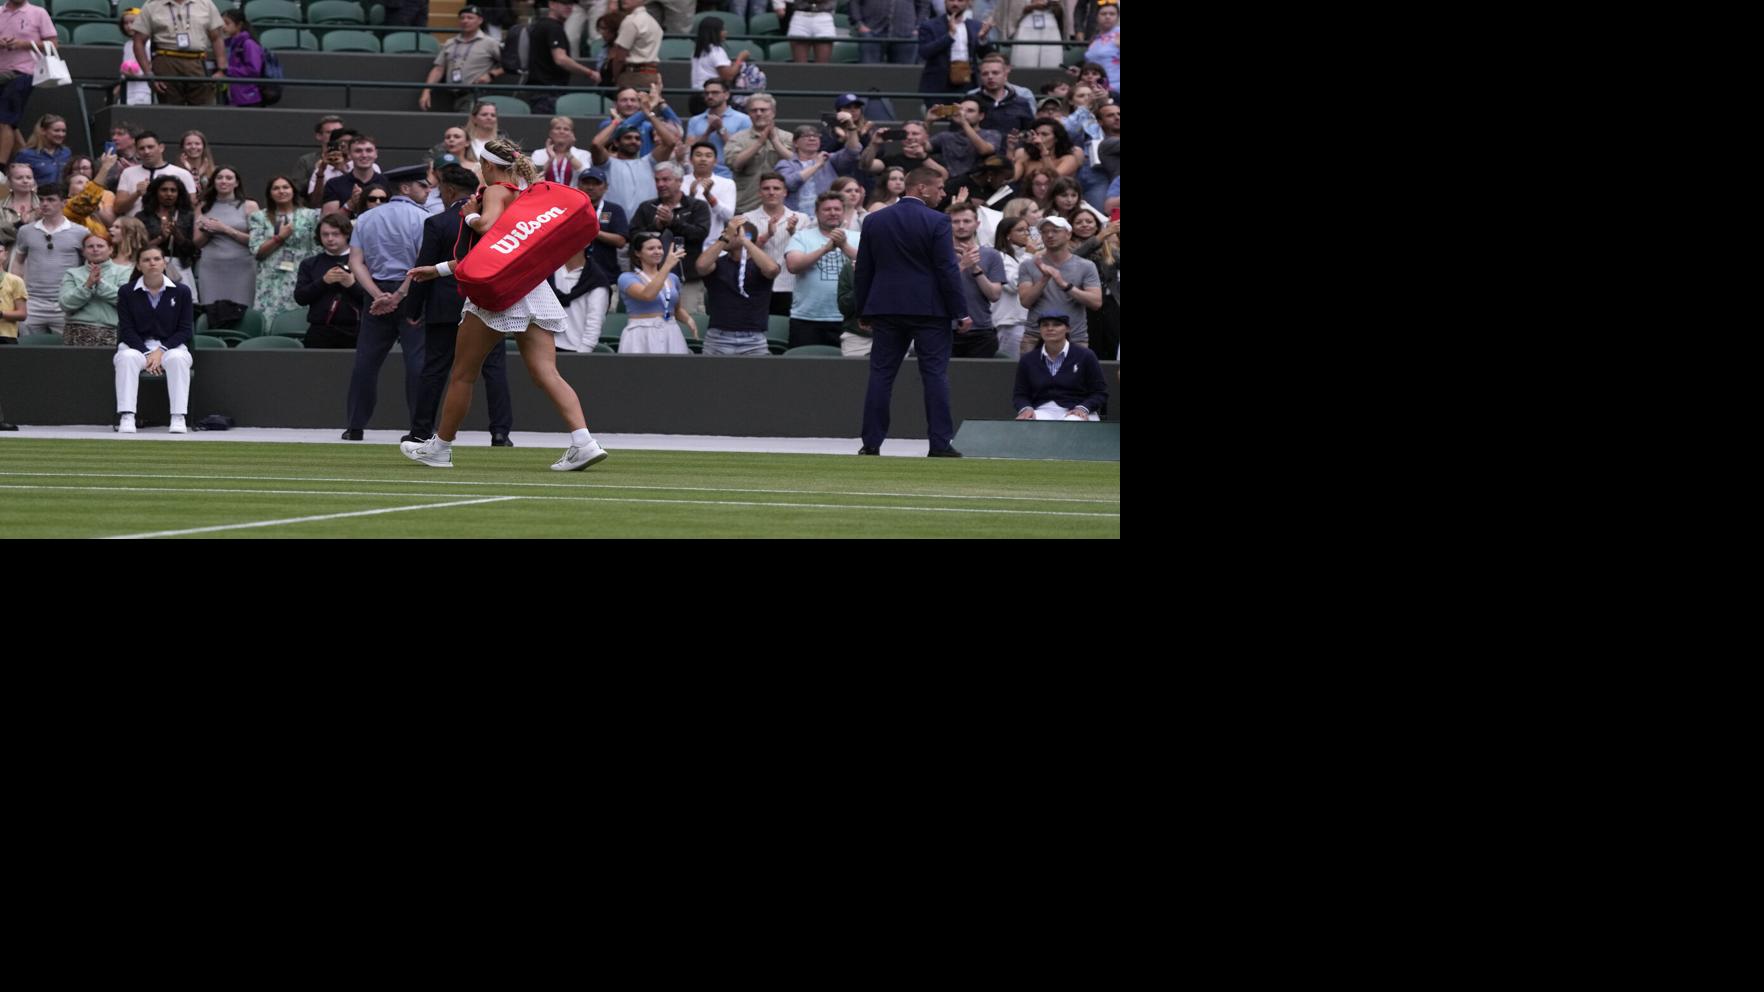 Azarenka booed after Wimbledon loss to Svitolina